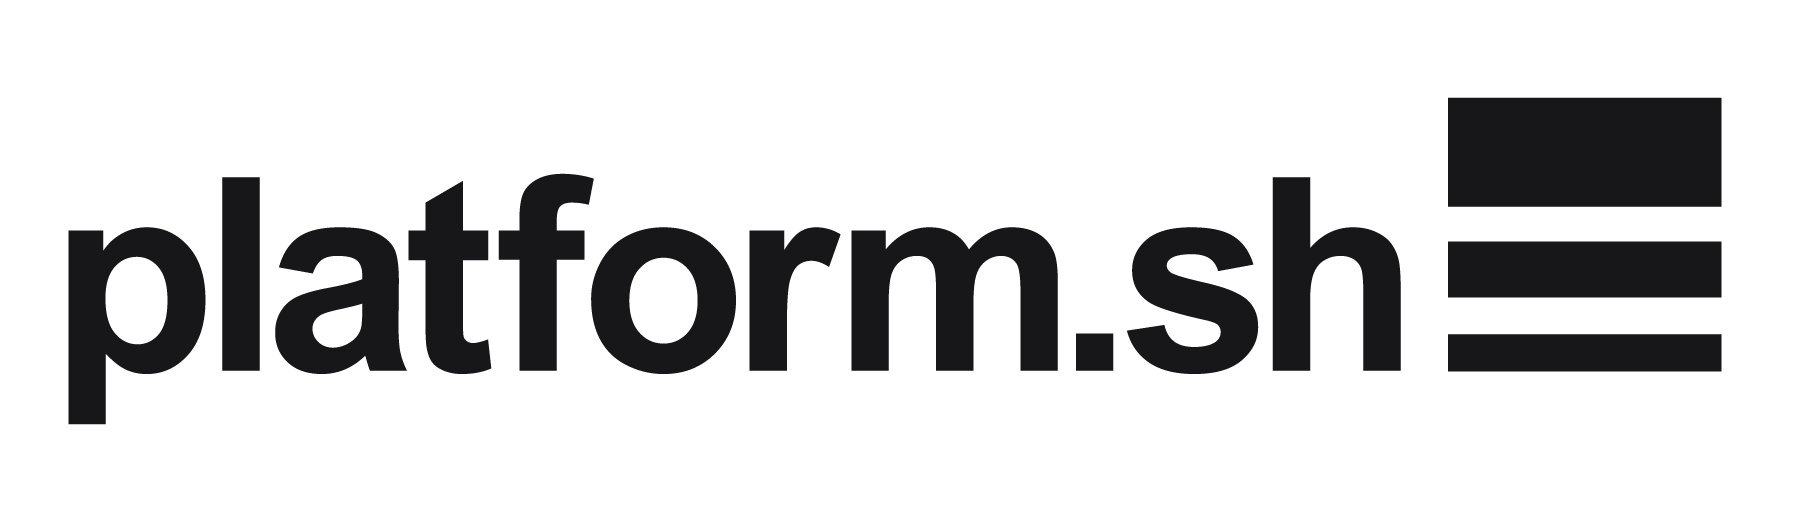 Logo of Platform.sh